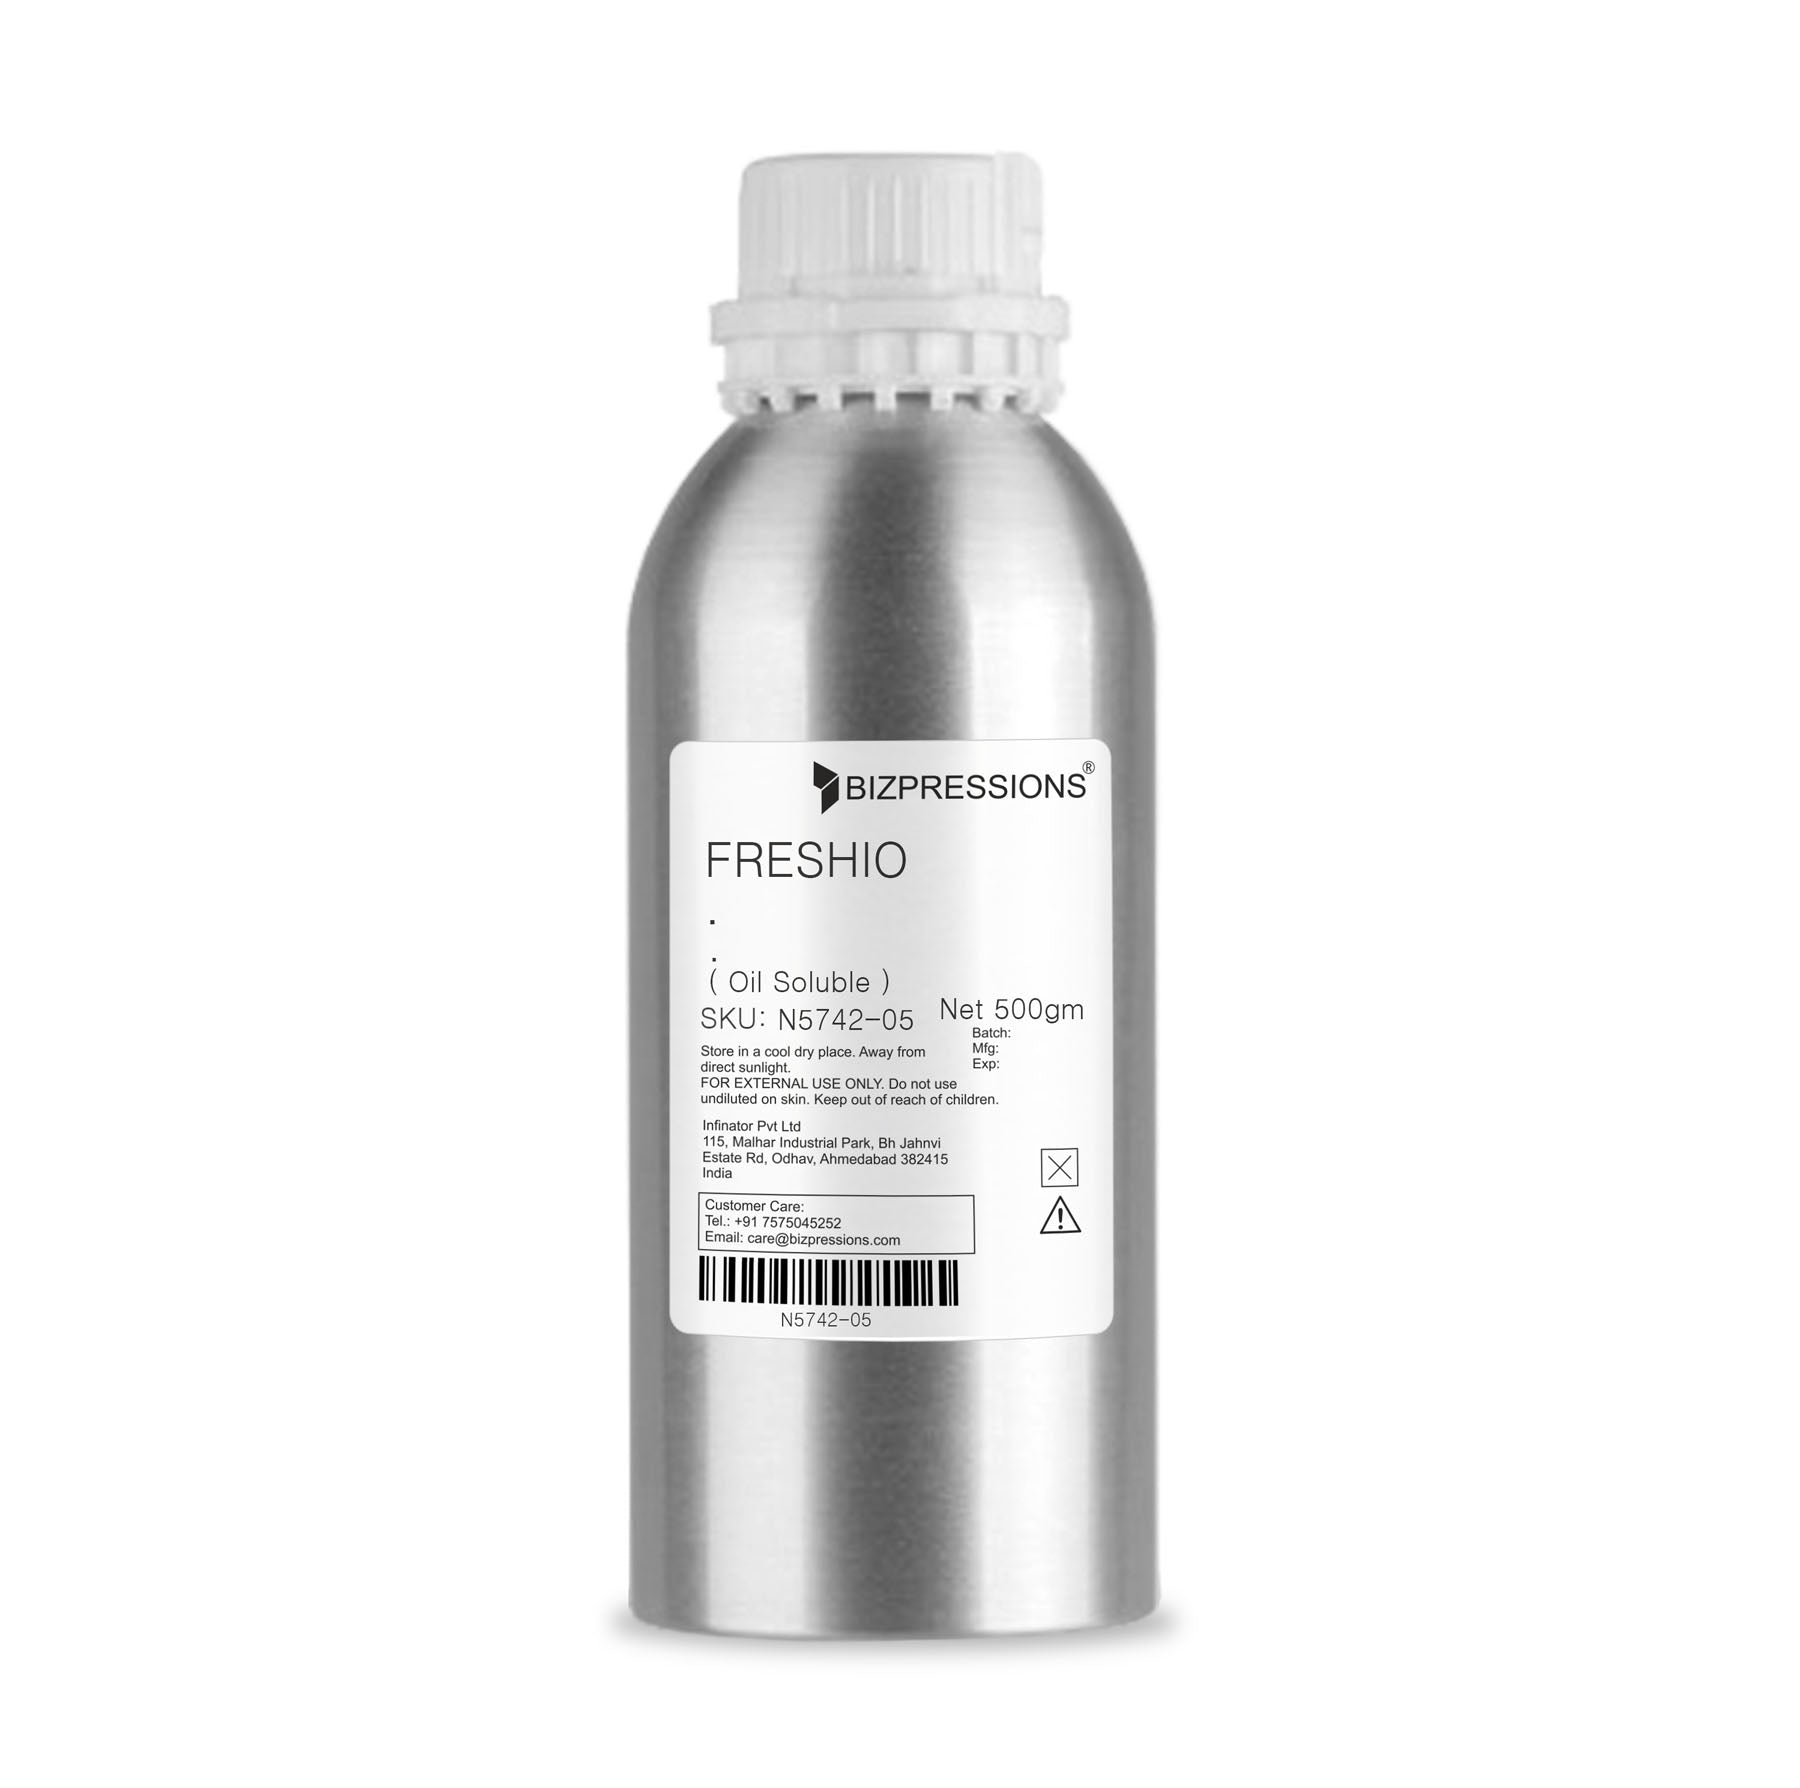 FRESHIO - Fragrance ( Oil Soluble ) - 500 gm